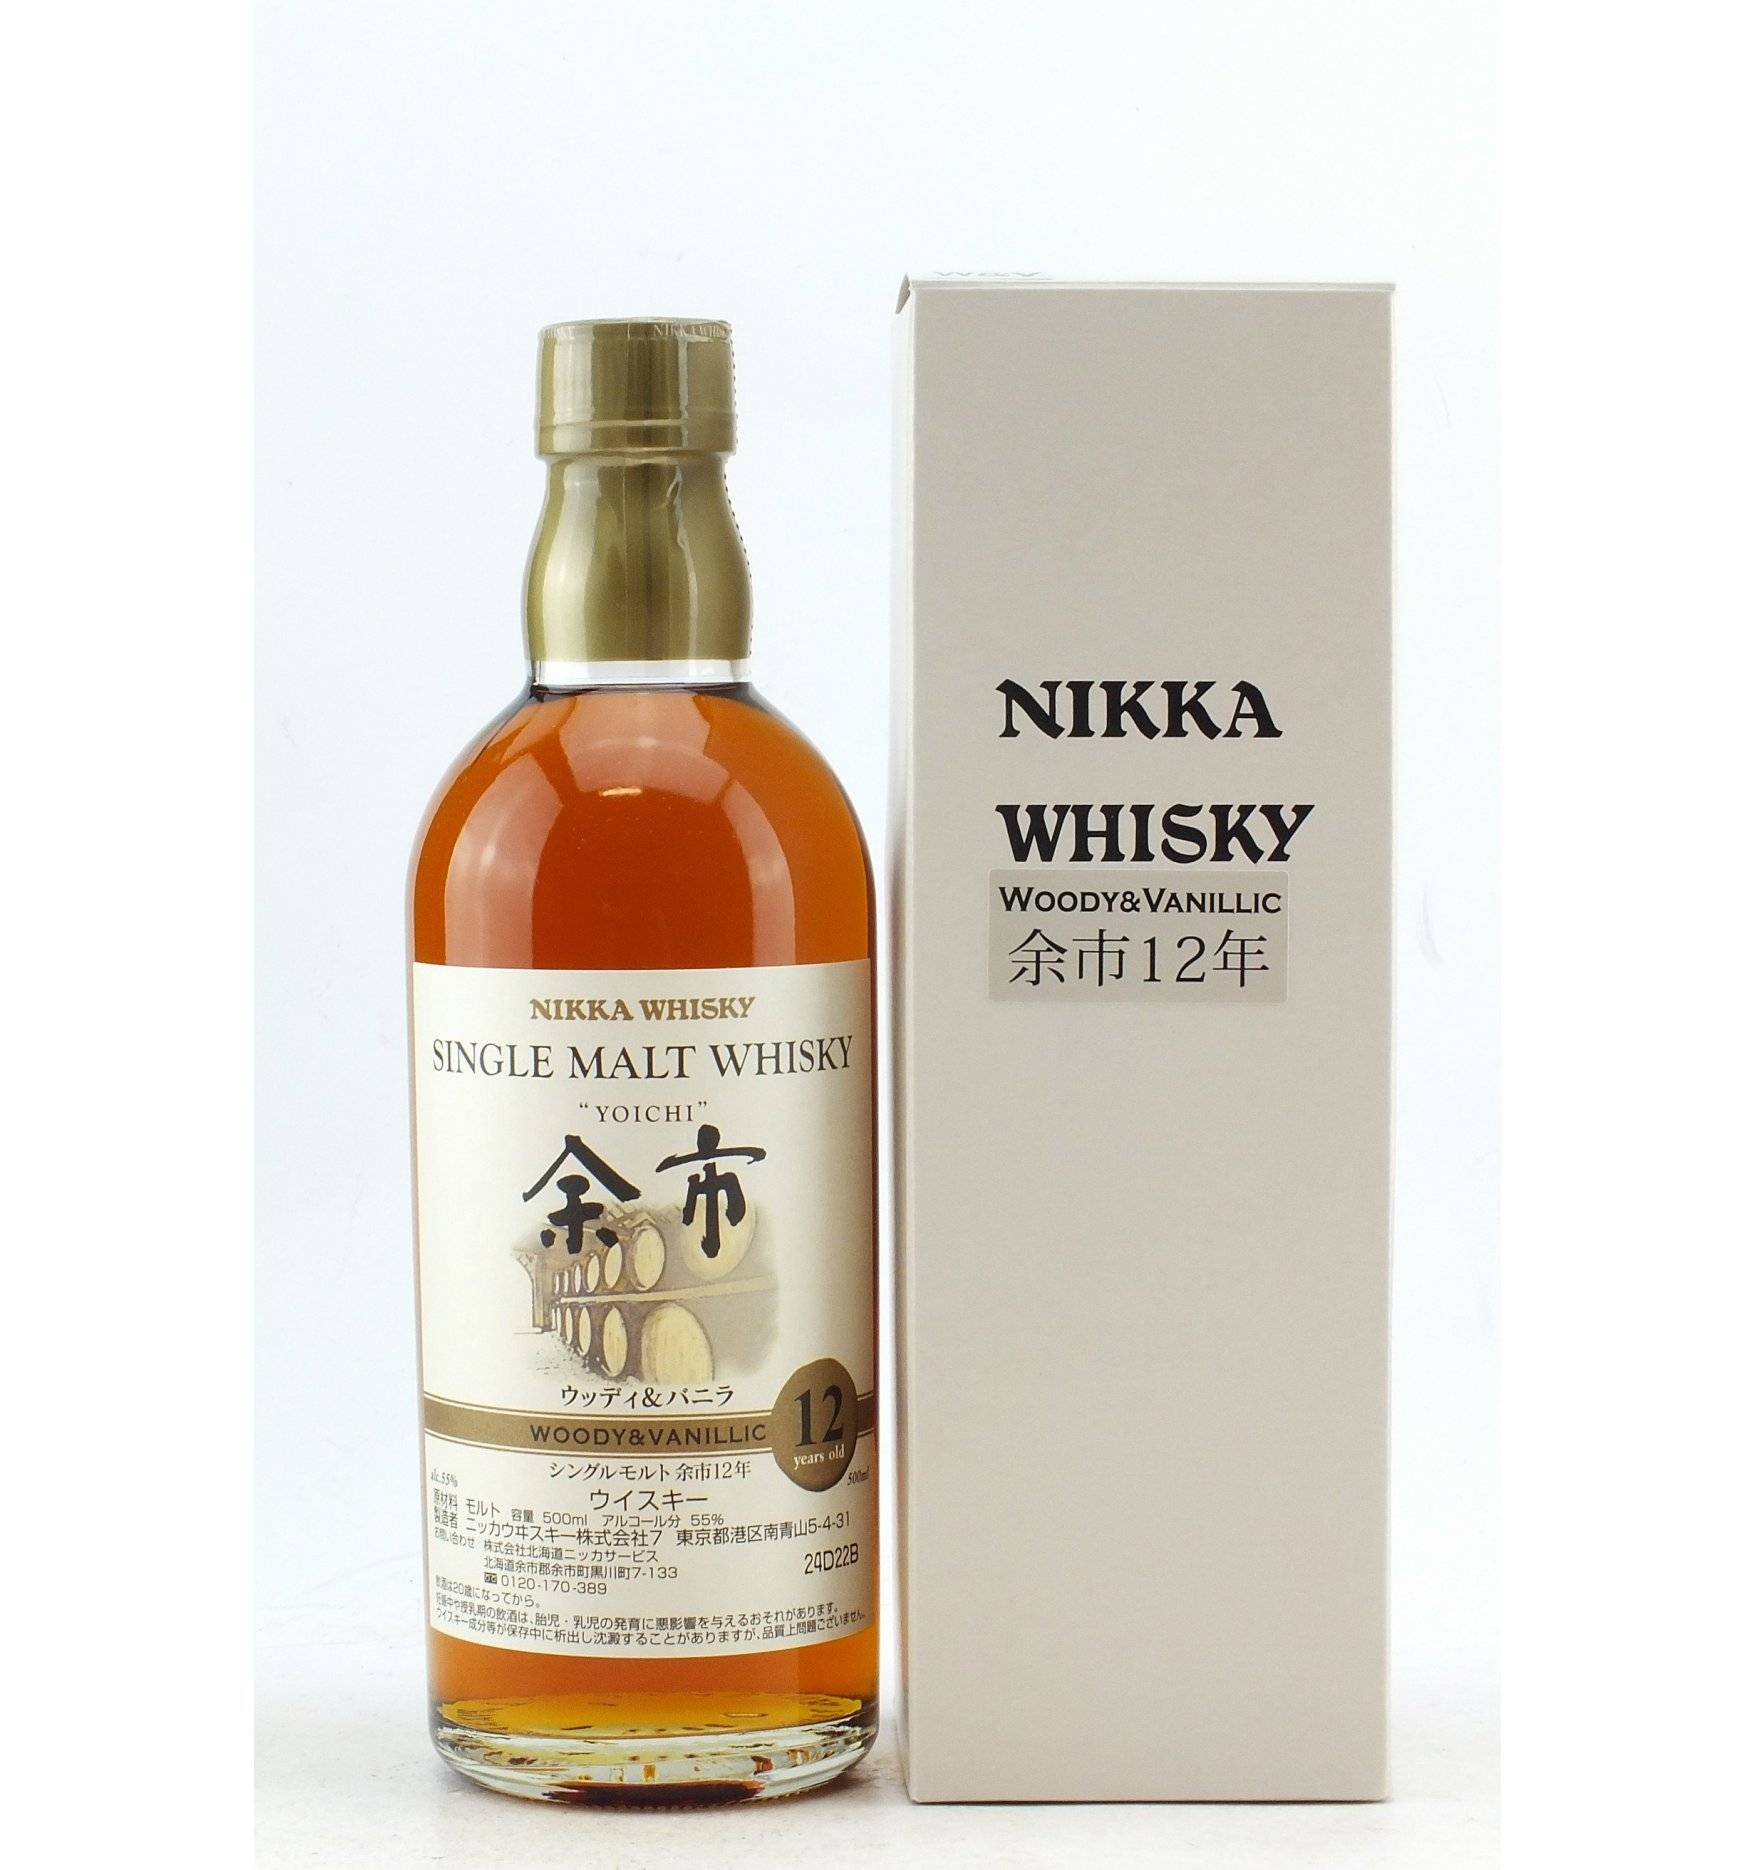 Nikka 12 Years Old - Yoichi Woody & Vanillic (500ml) - Just Whisky